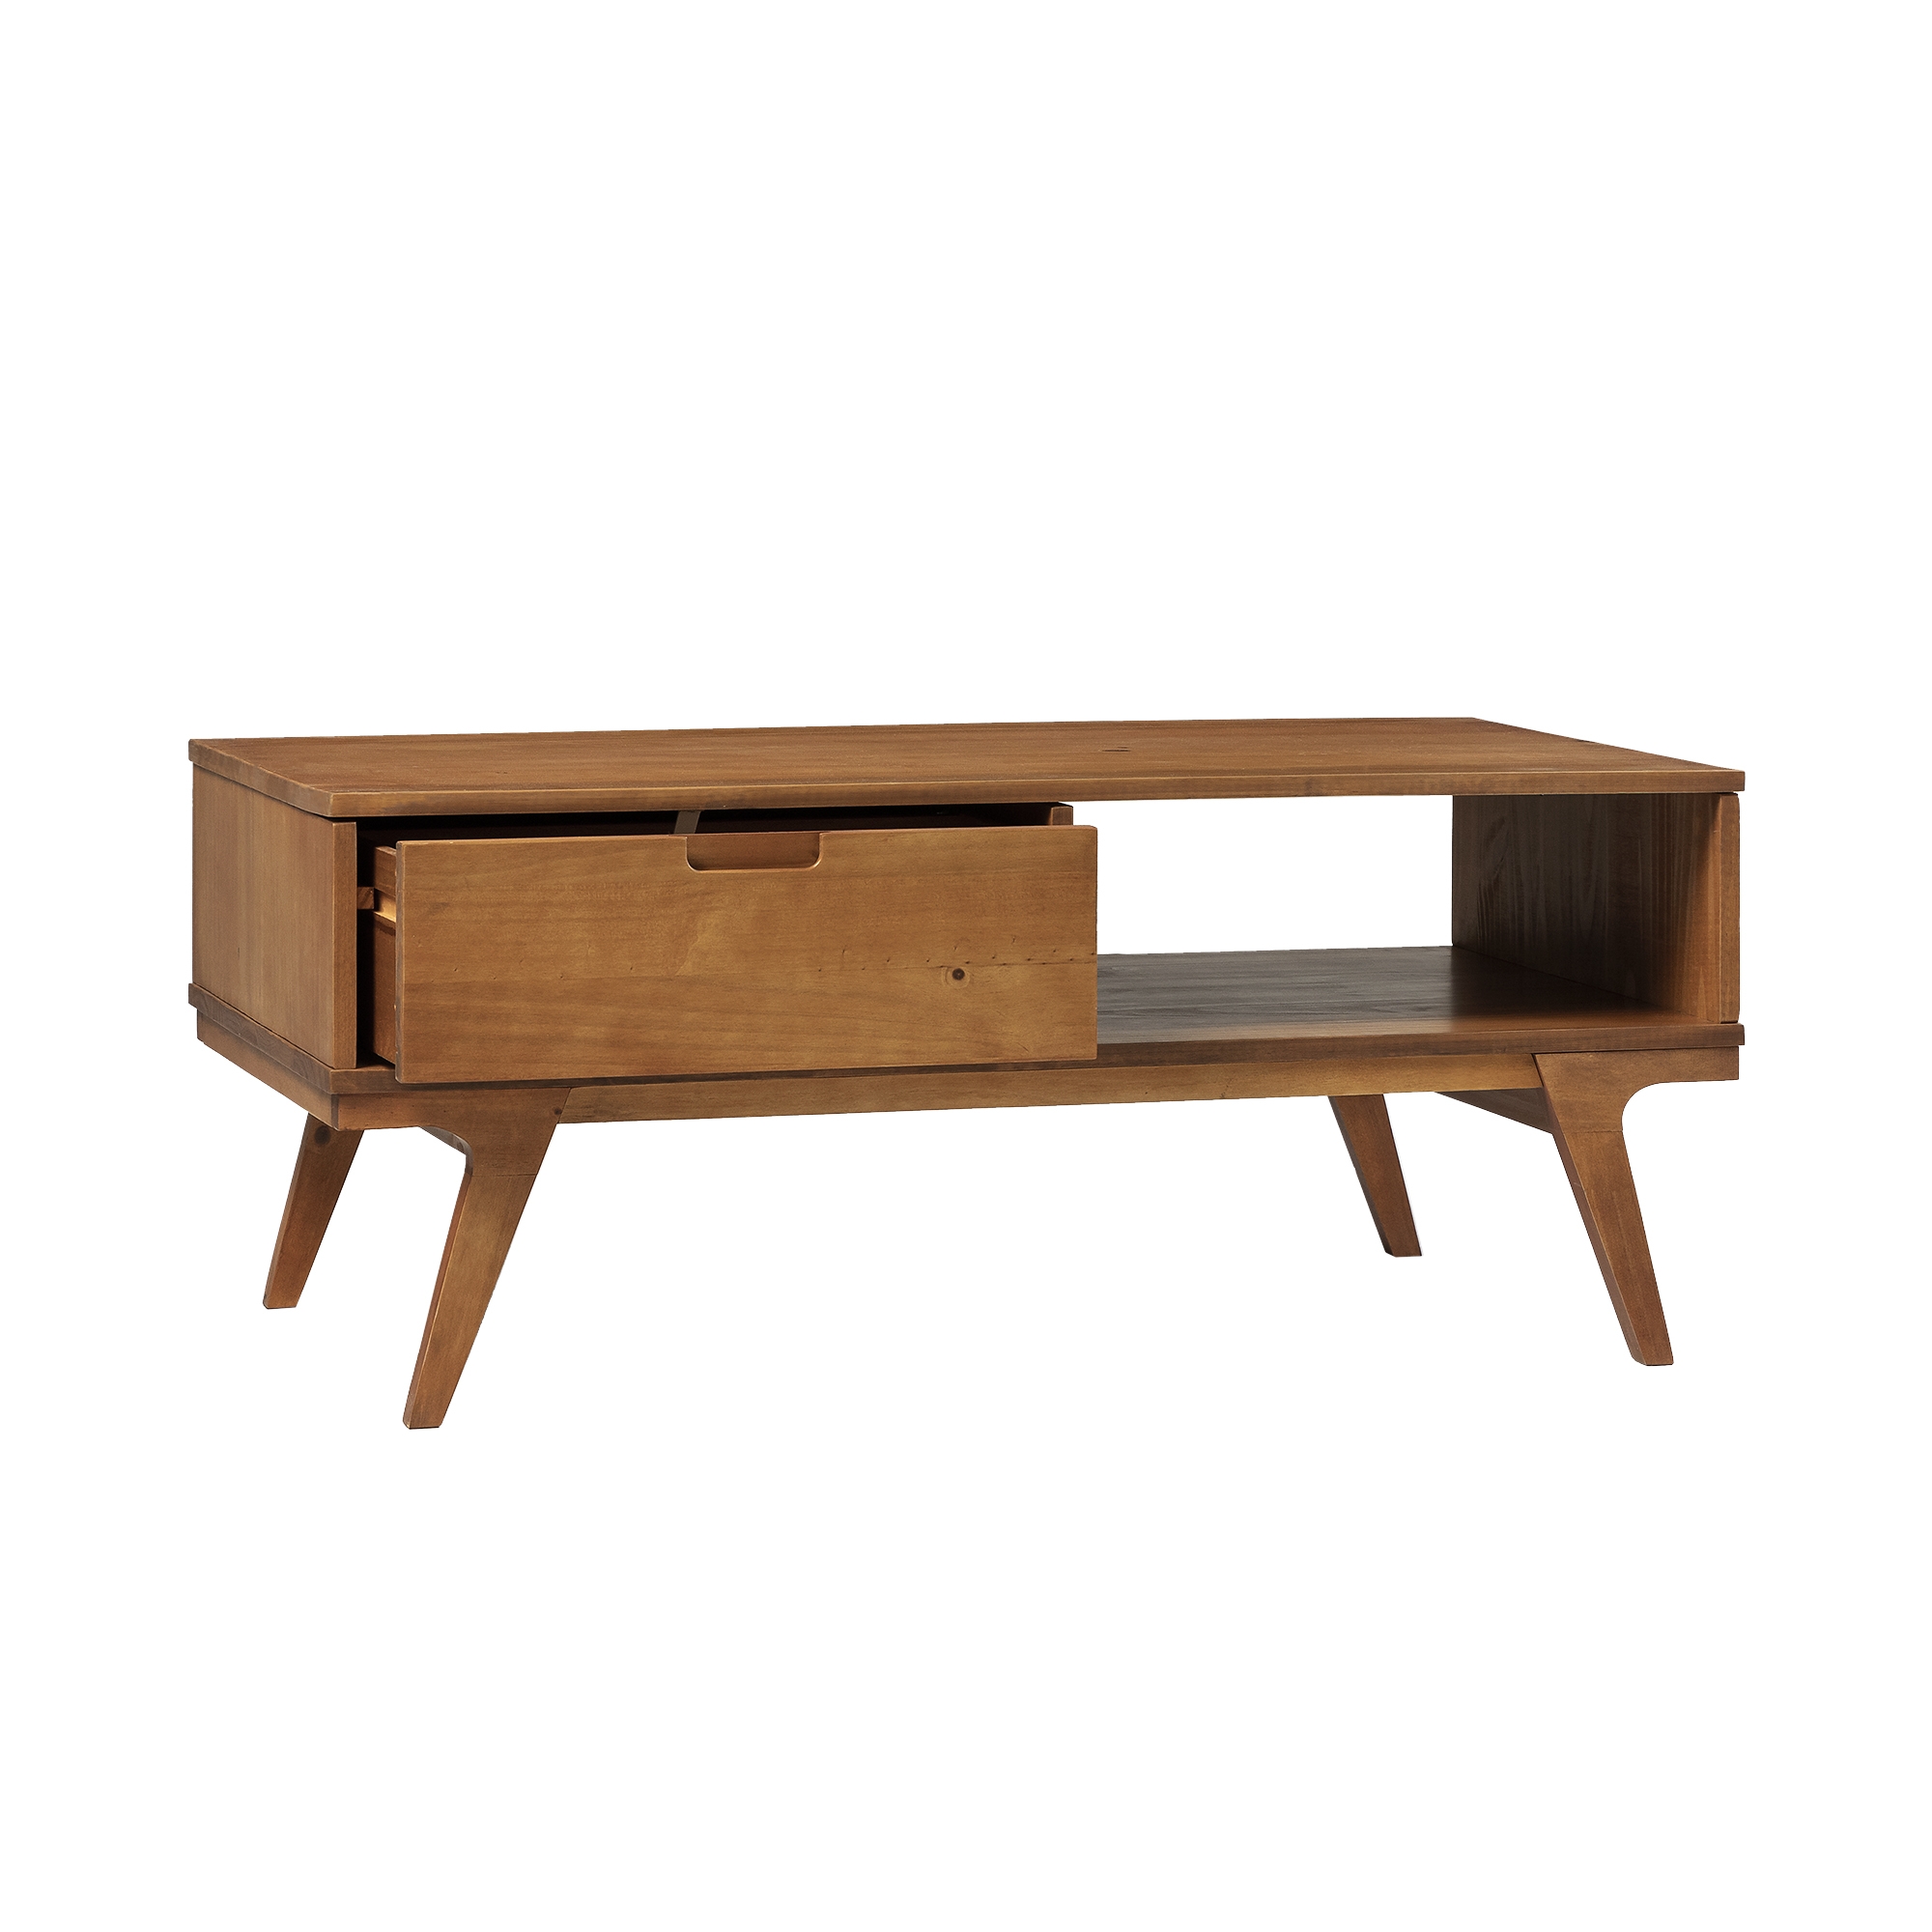 Mateo 1 Drawer Bridge Leg Solid Wood Coffee Table - Caramel - Image 4